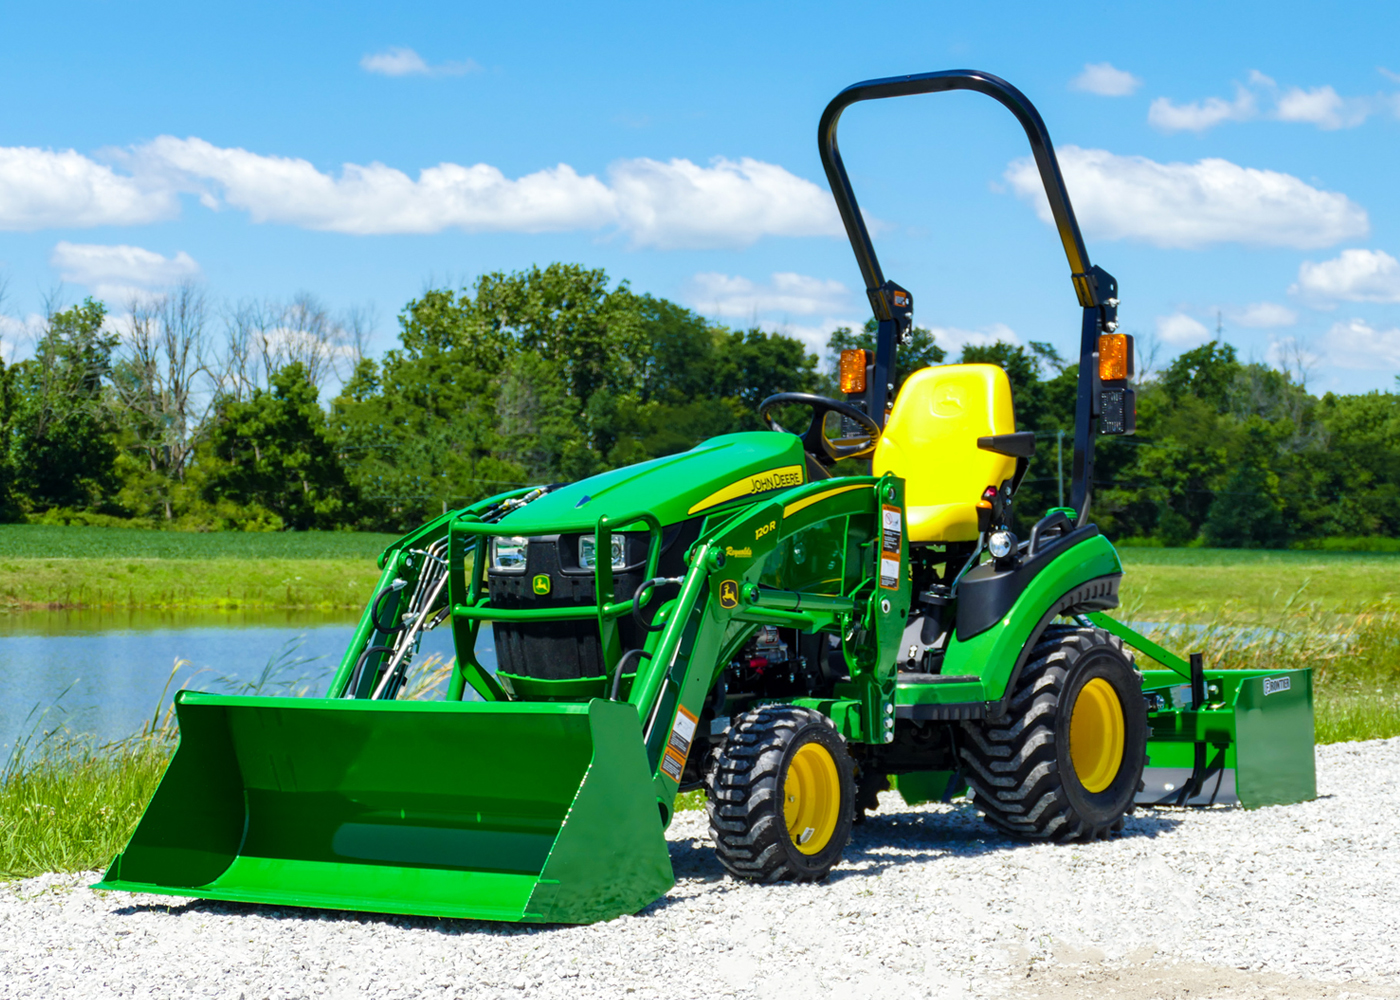 1025r-sub-compact-utility-tractor-reynolds-farm-equipment